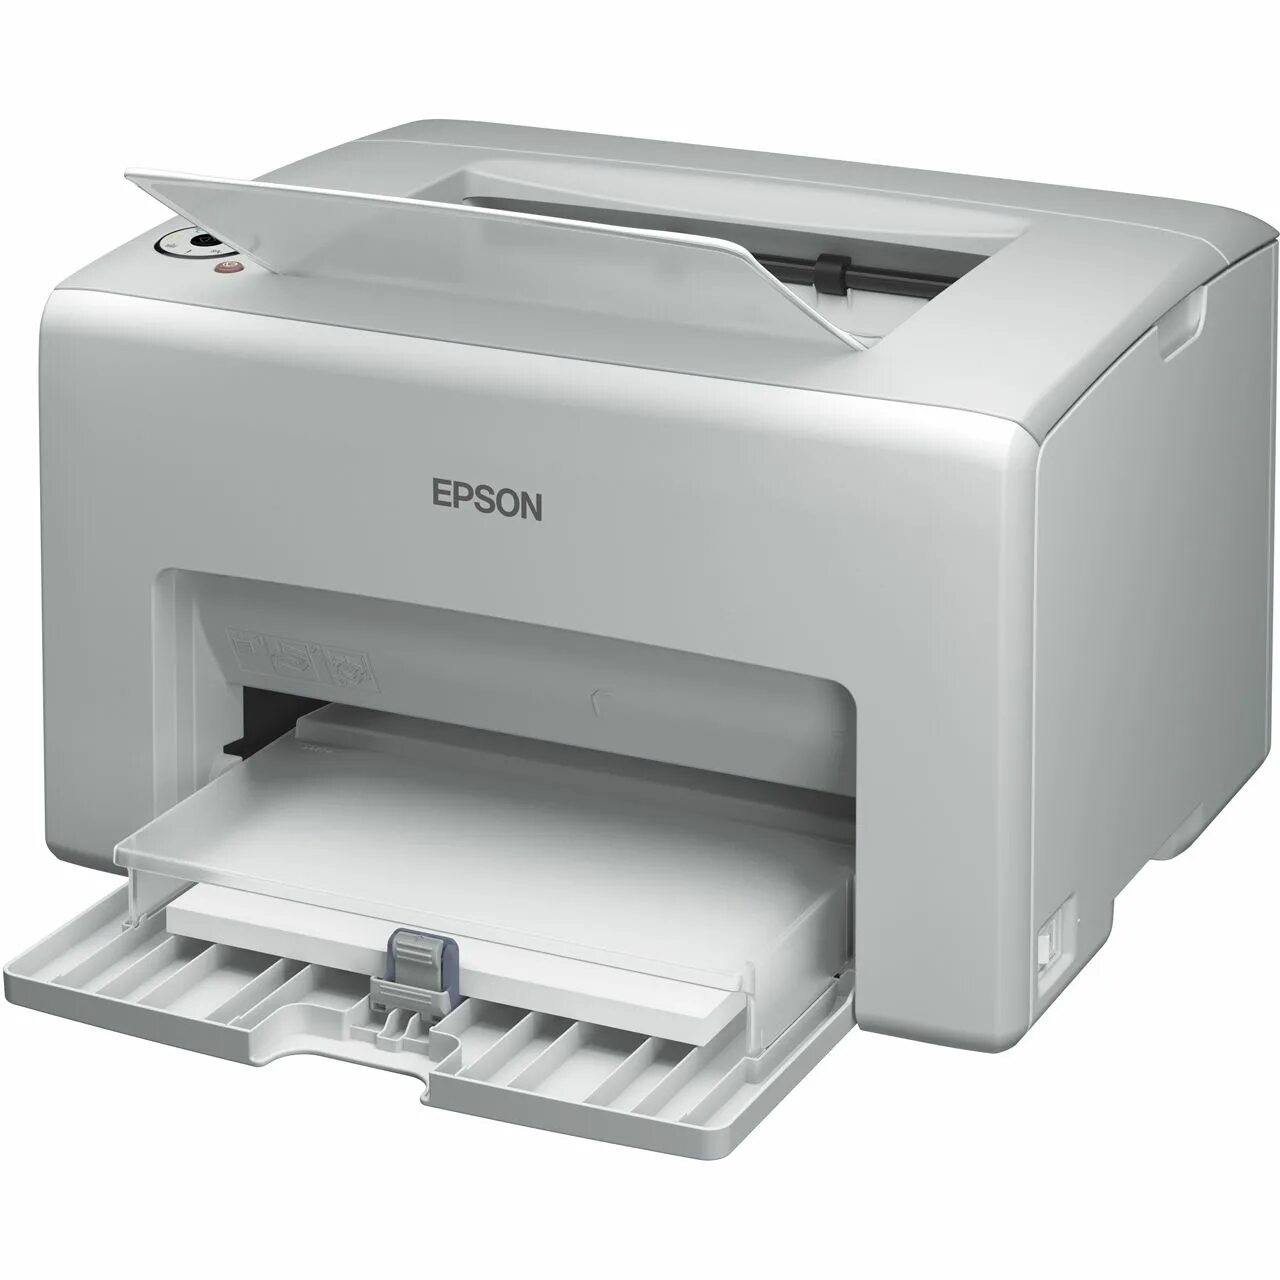 Epson ACULASER c1750n. Epson ACULASER c1700. Принтер Эпсон лазерный. Epson c1700. Модели лазерных принтеров